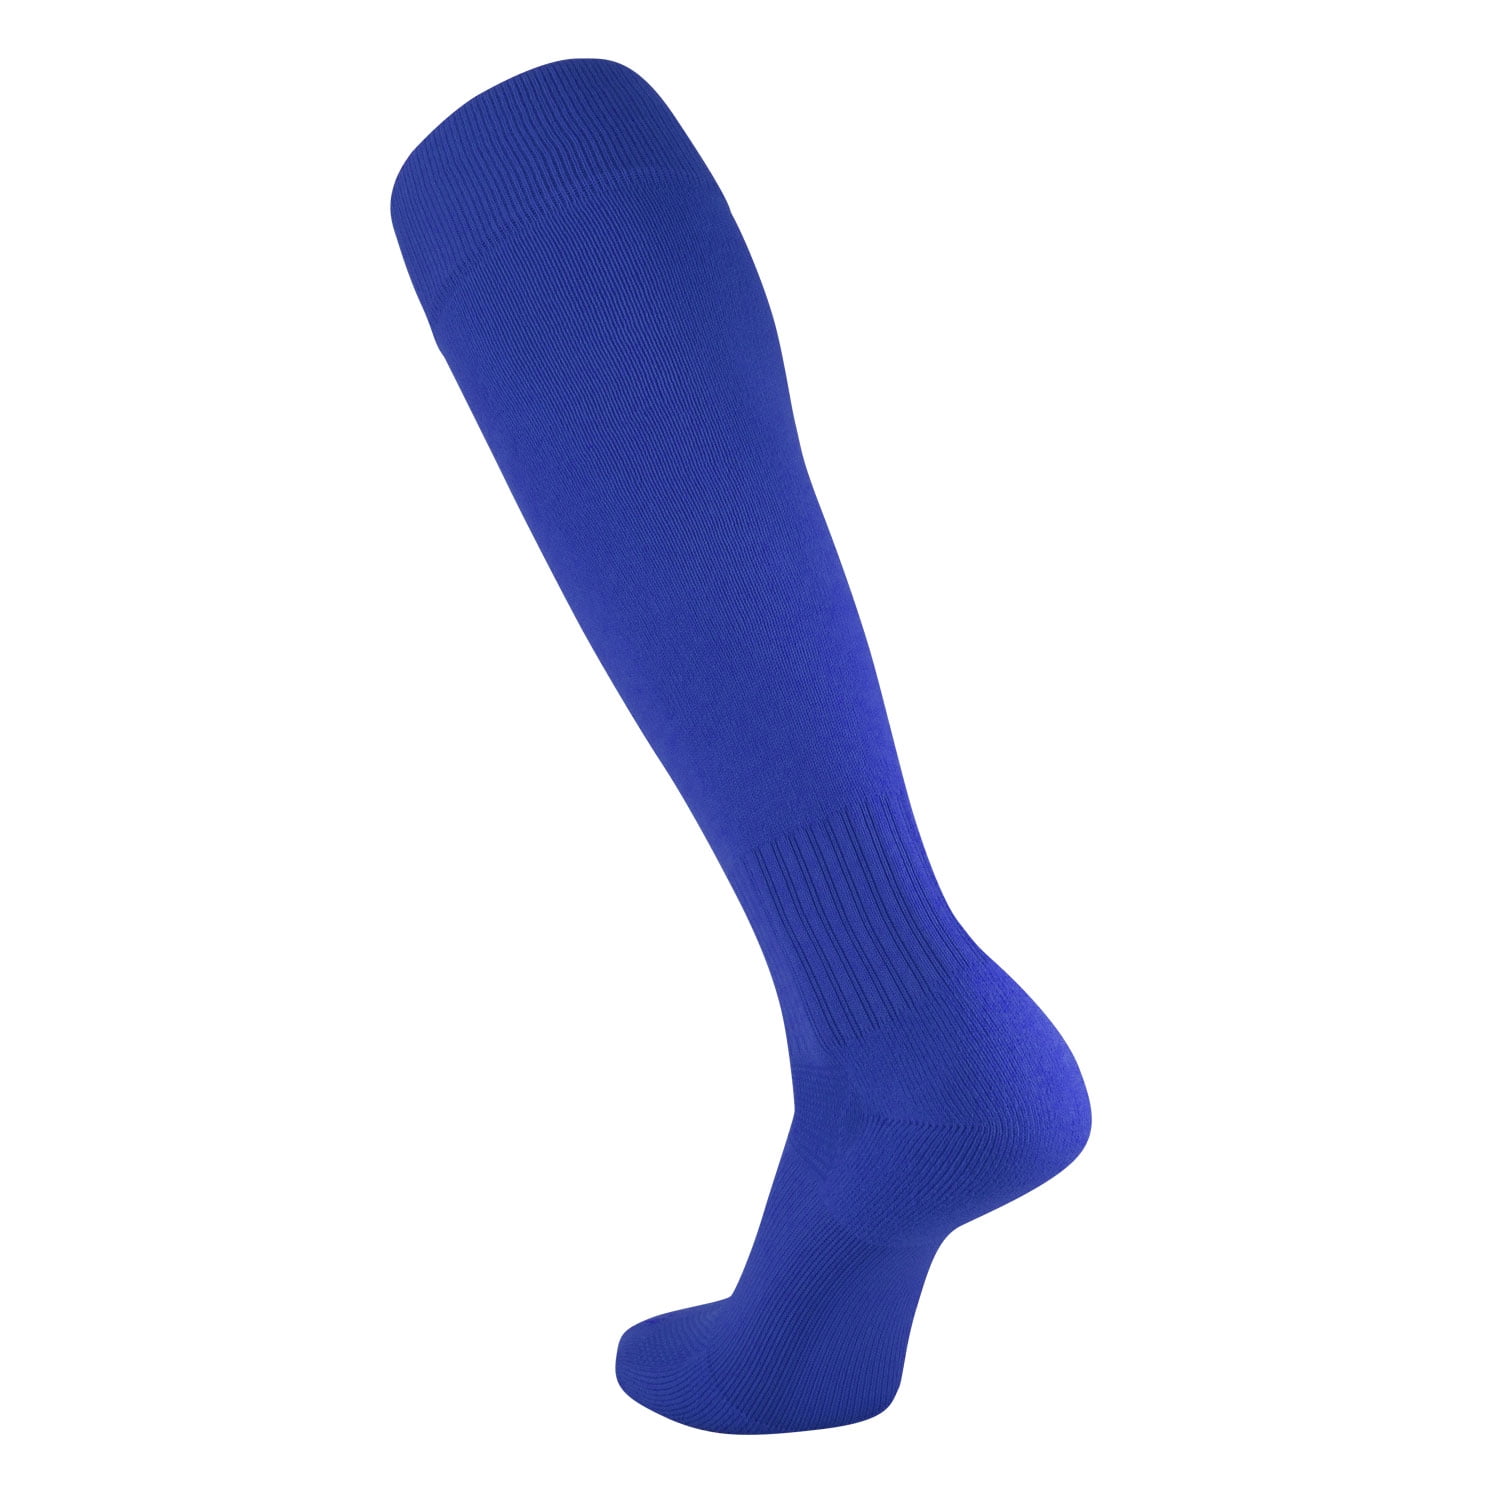 TCK Finale Solid Color proDRI Soccer Socks (M, Gold) 